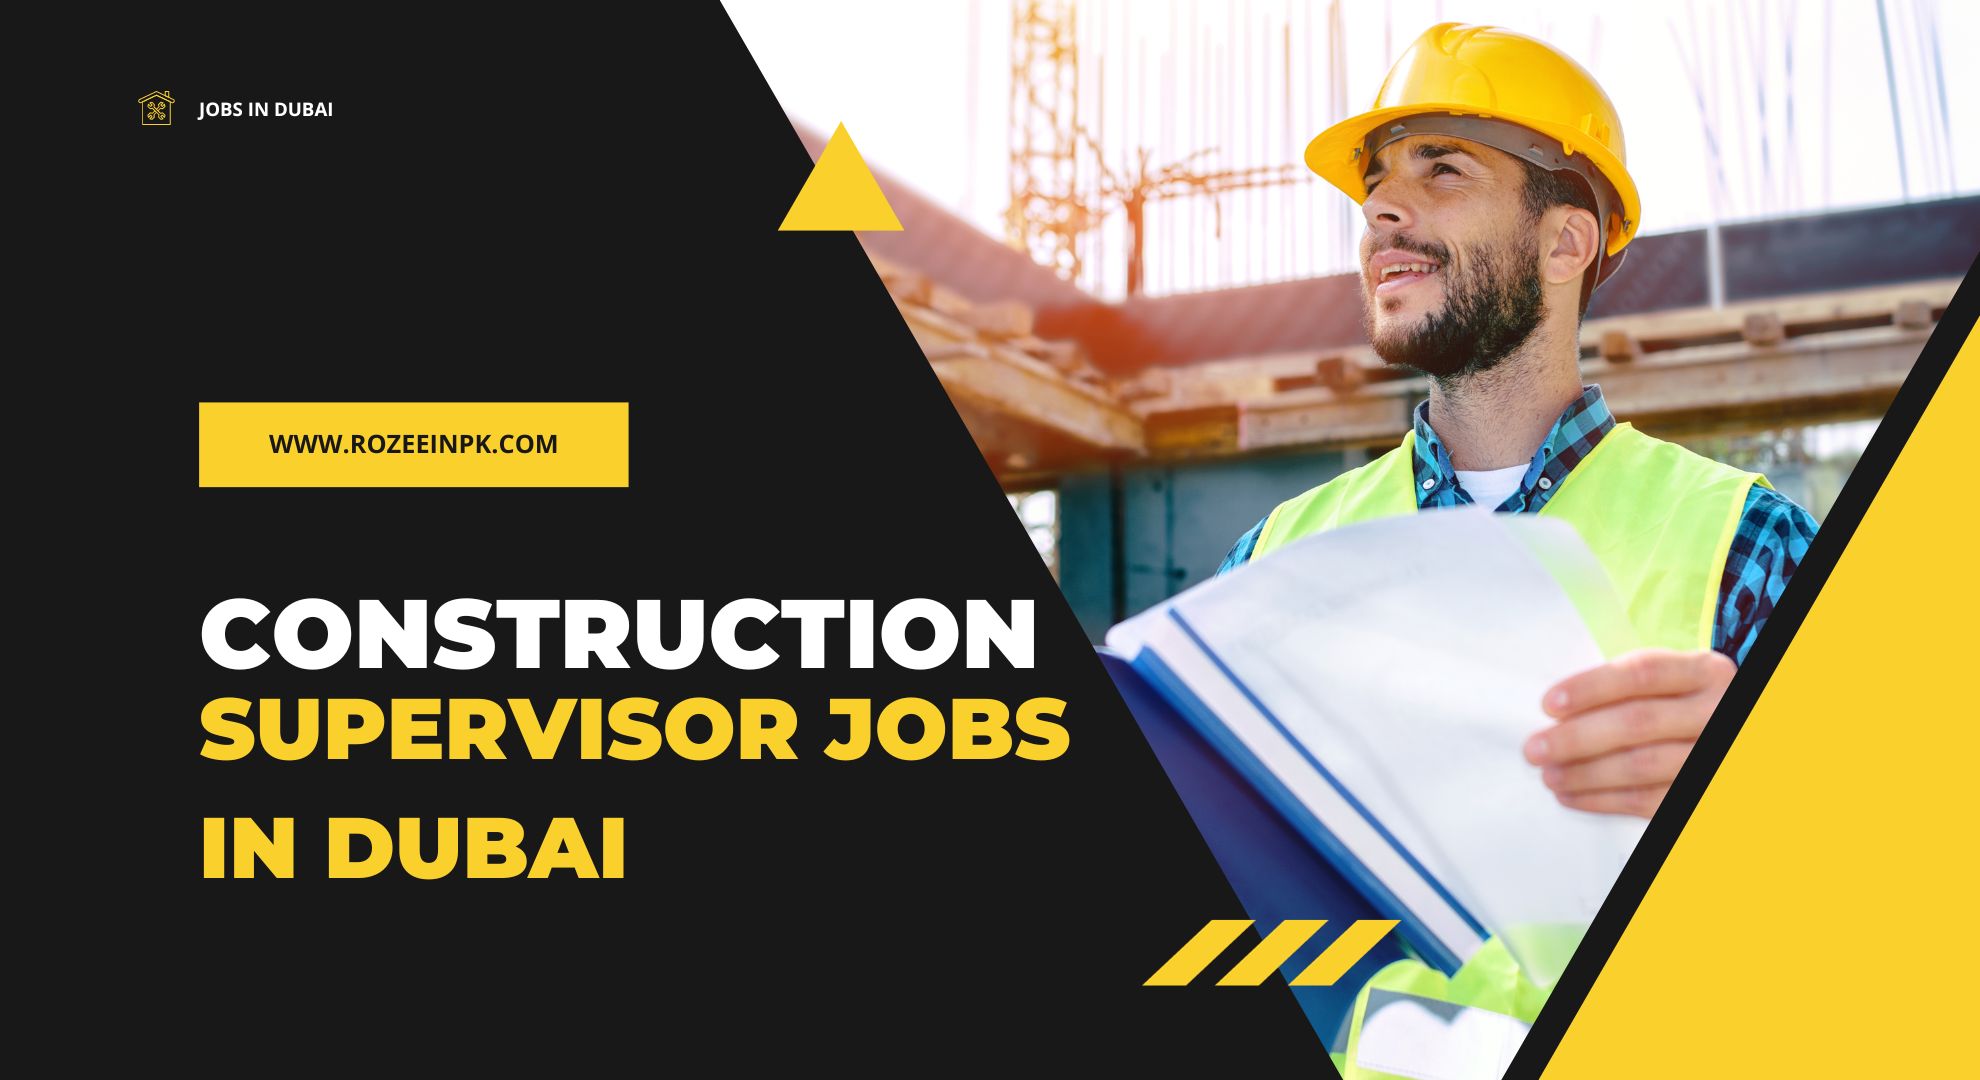 Construction Supervisor jobs in Dubai